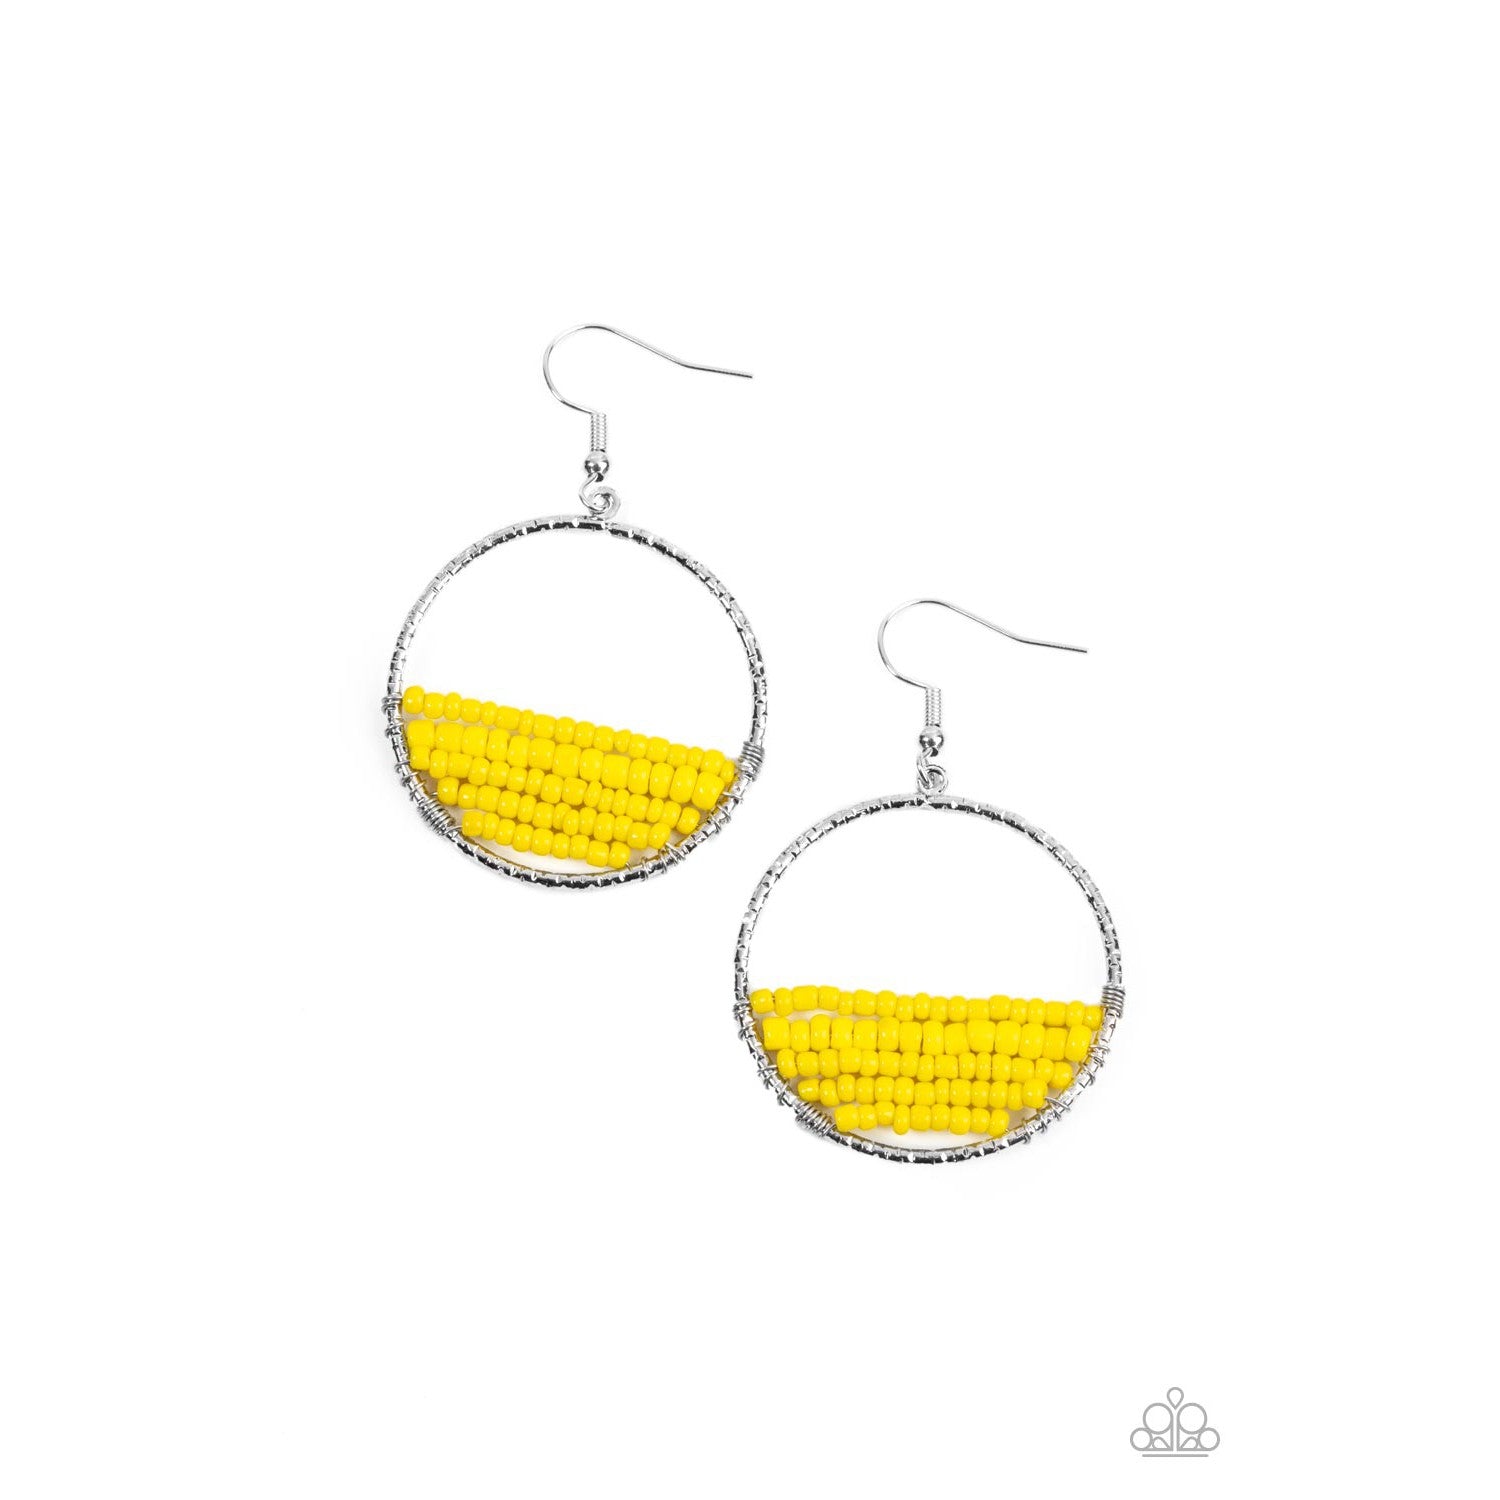 Head-Over-Horizons - Yellow Seed Bead Earrings - Bling by Danielle Baker